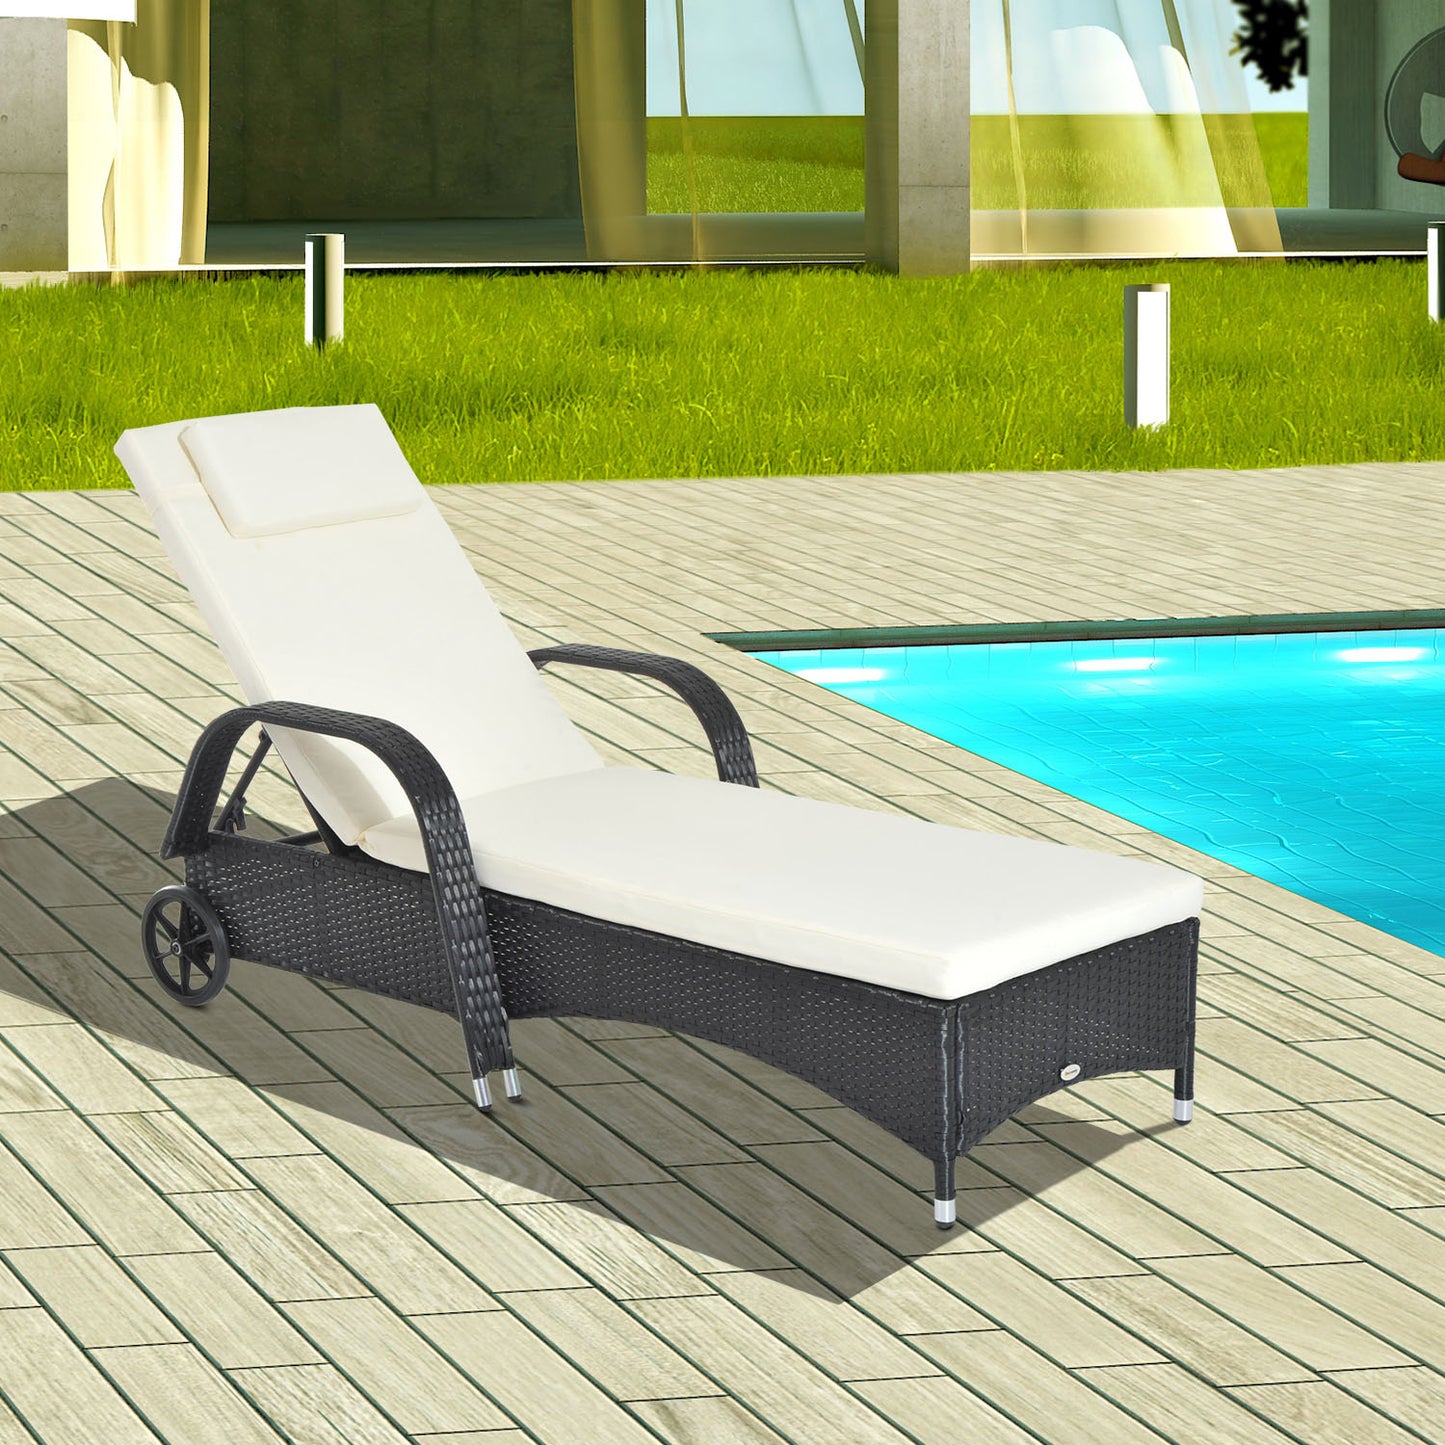 Outsunny Rattan Sun Lounger Recliner Bed, Garden Patio Outdoor Wicker Adjustable Headrest Furniture, Black